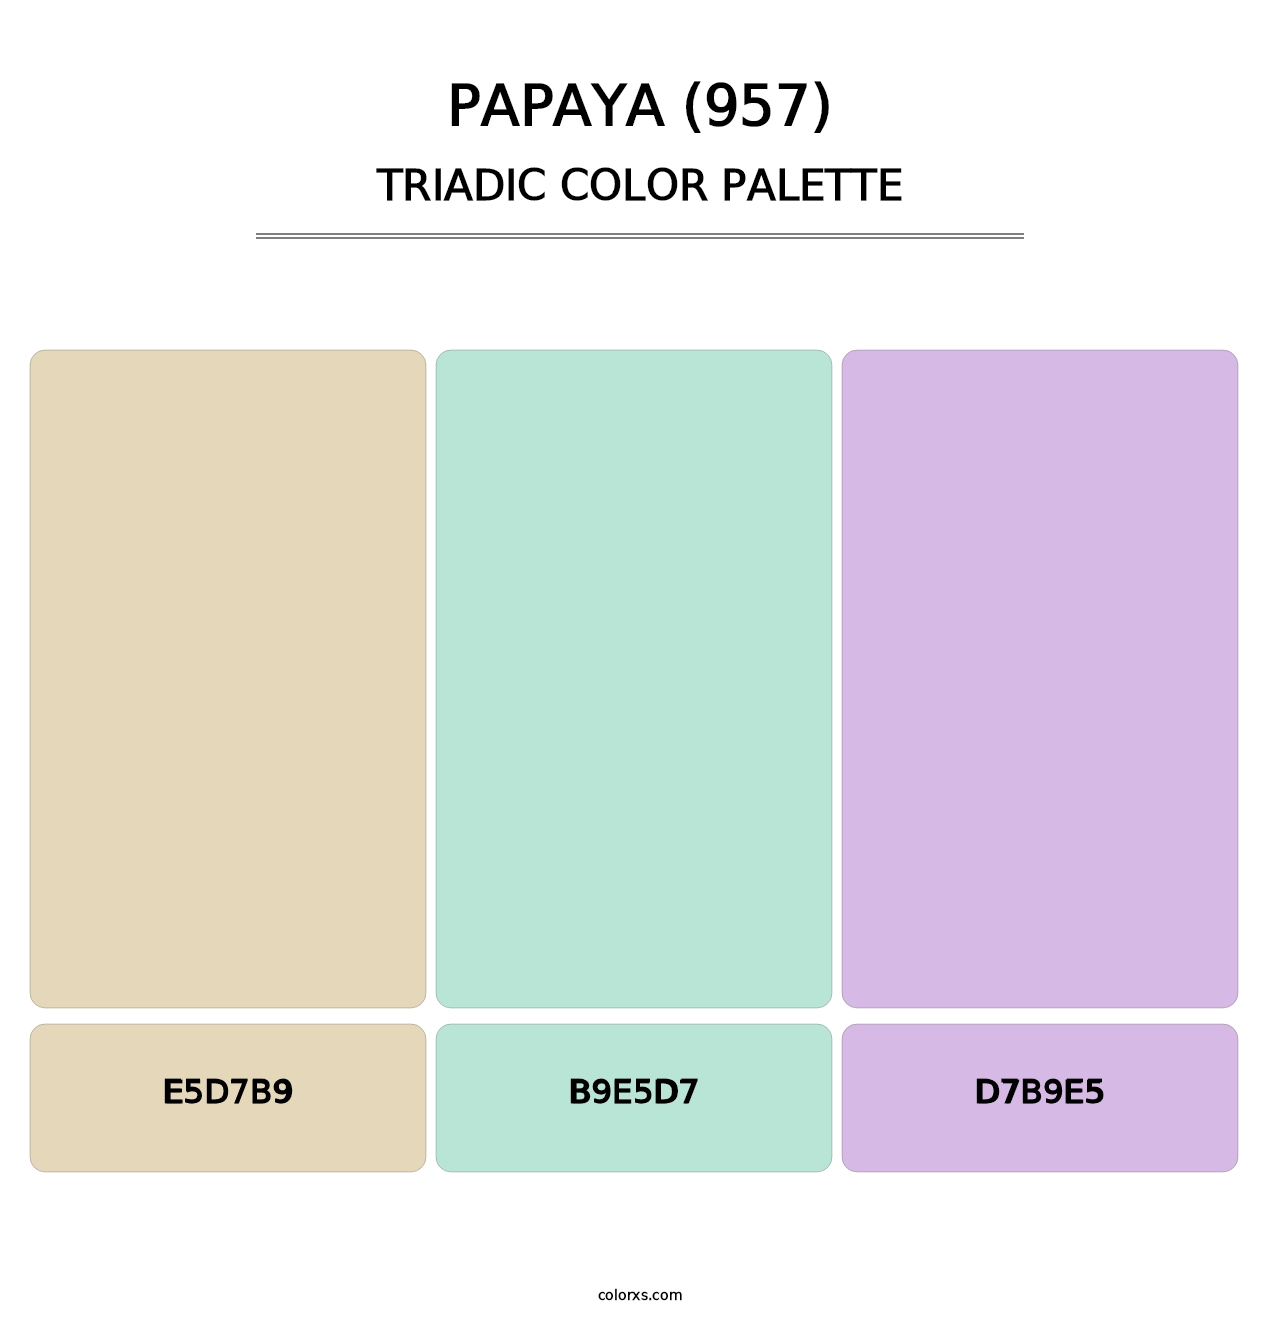 Papaya (957) - Triadic Color Palette